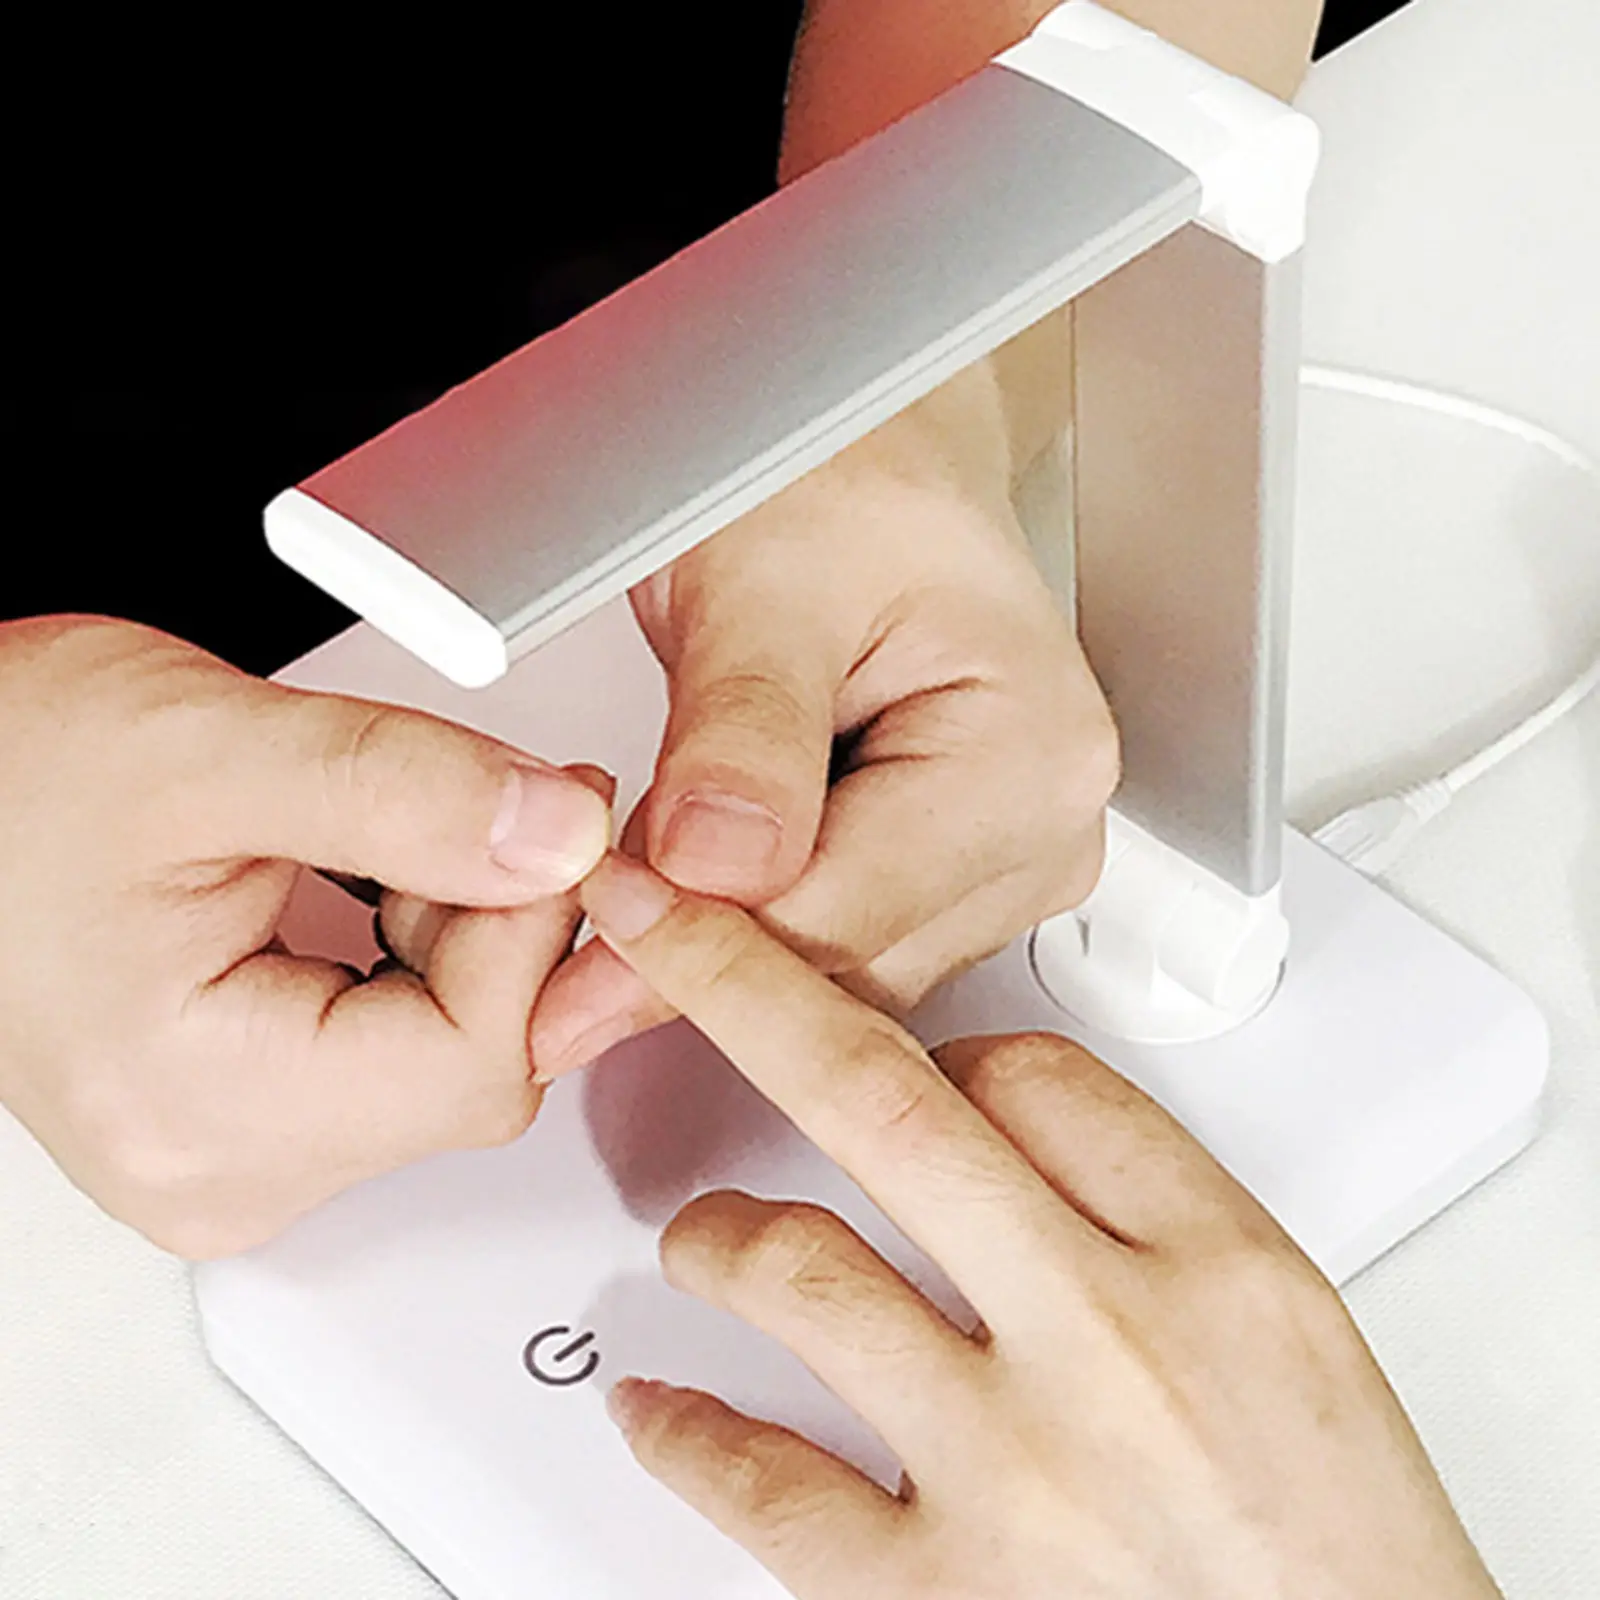 LED Nail Lamp Rechargeable Tools Beauty Accessories Nail Dryer for Nail Art Nail Lamp Gel Polish Nail Light Beauty Supplies